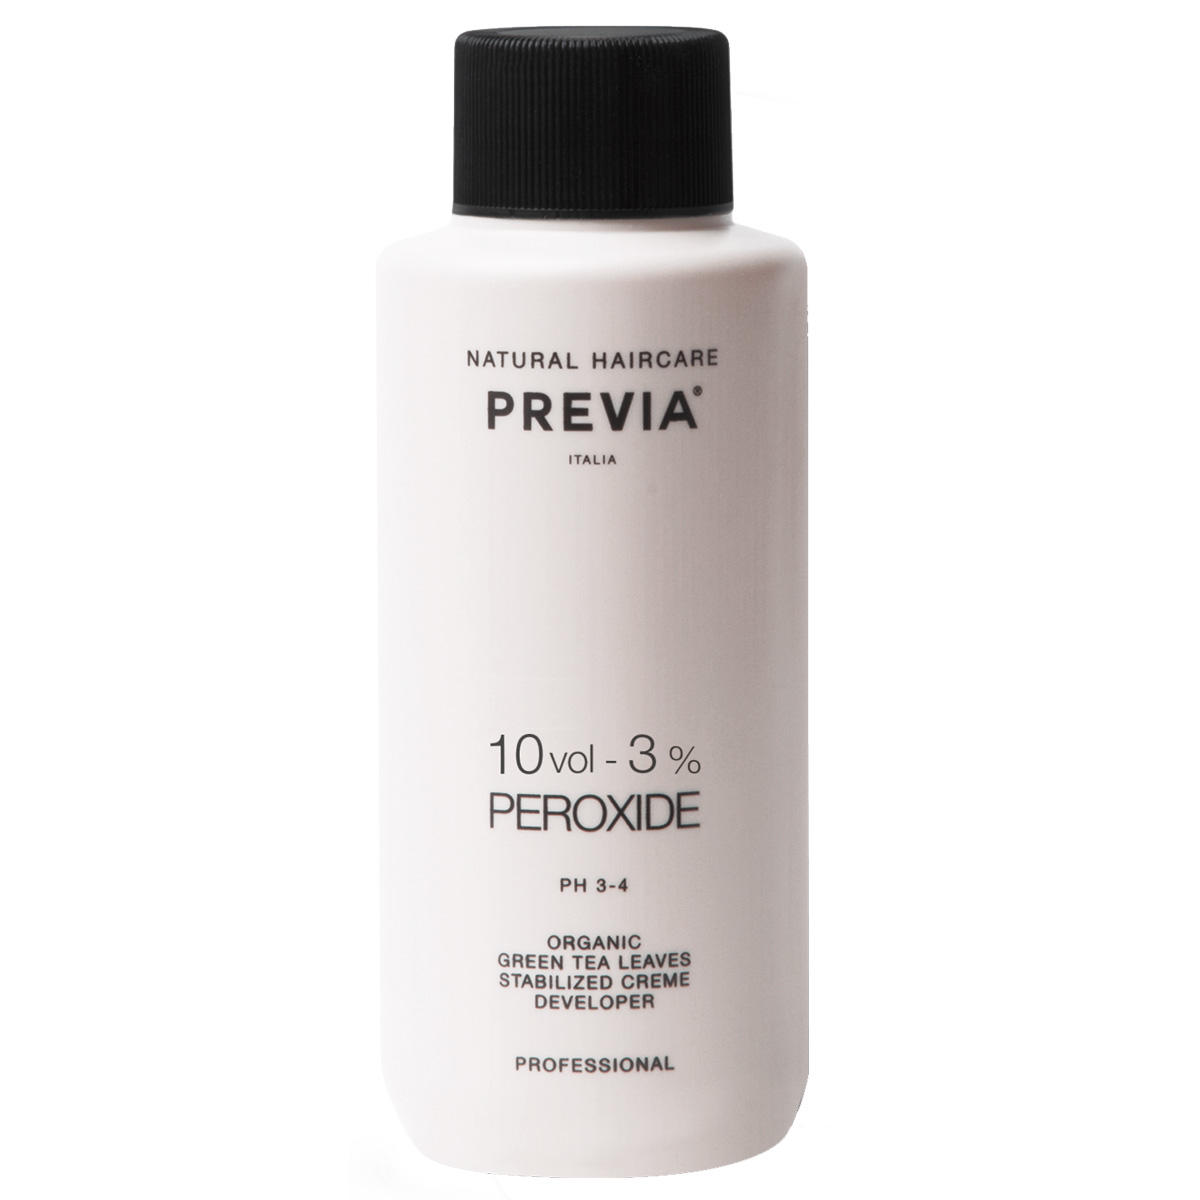 PREVIA Stabilized Creme Peroxide 3 % - 10 Vol., 150 ml - 1